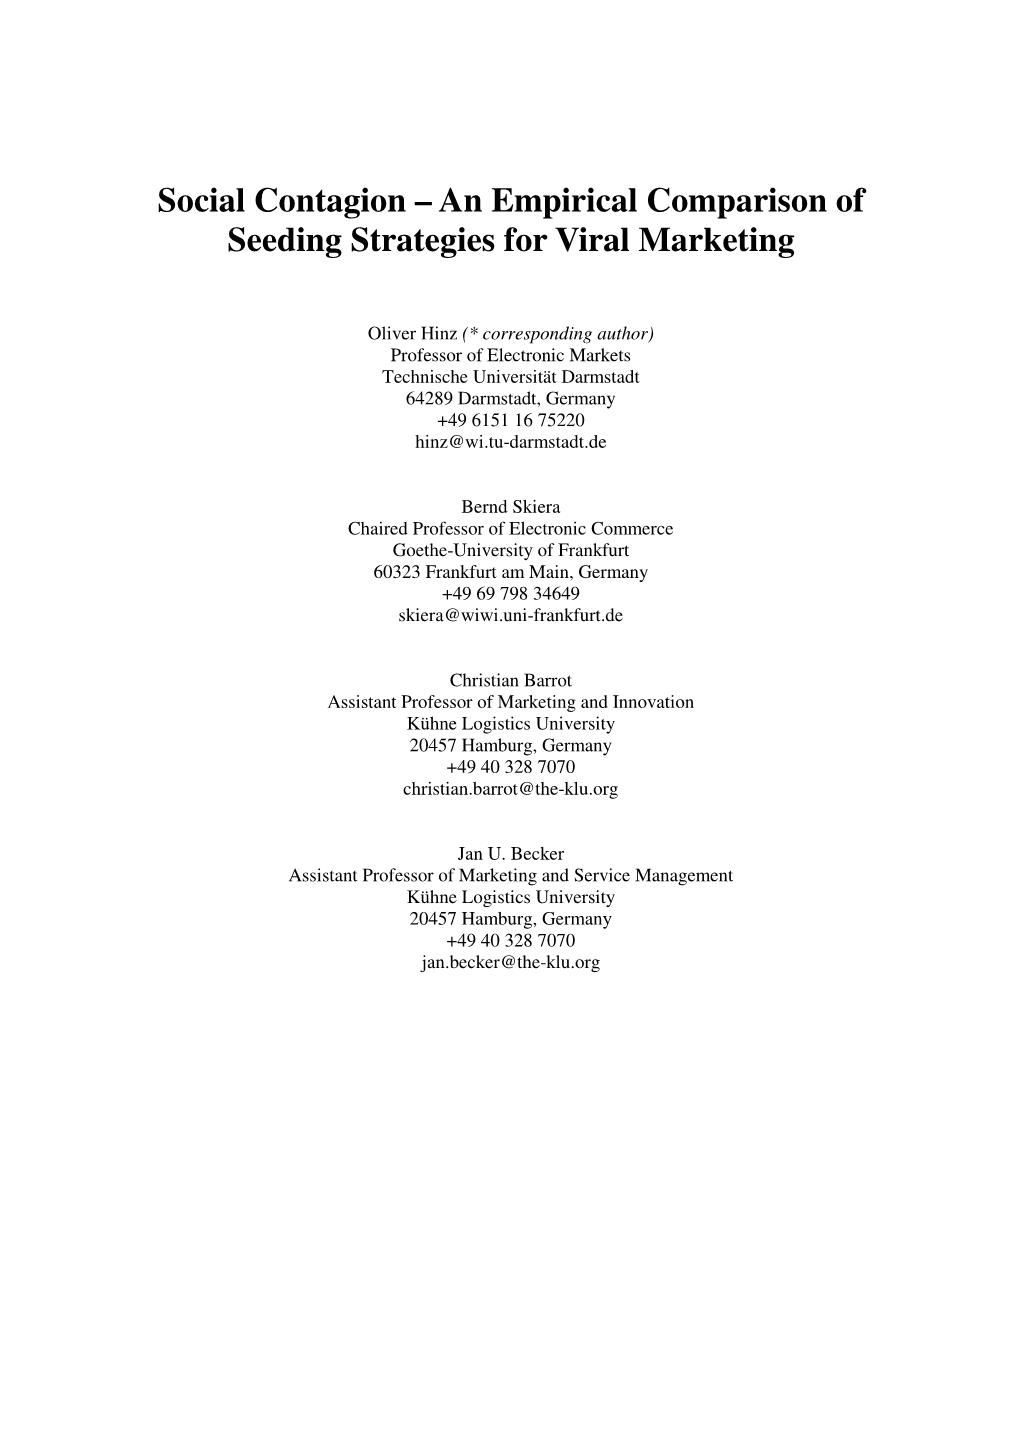 An Empirical Comparison of Seeding Strategies for Viral Marketing